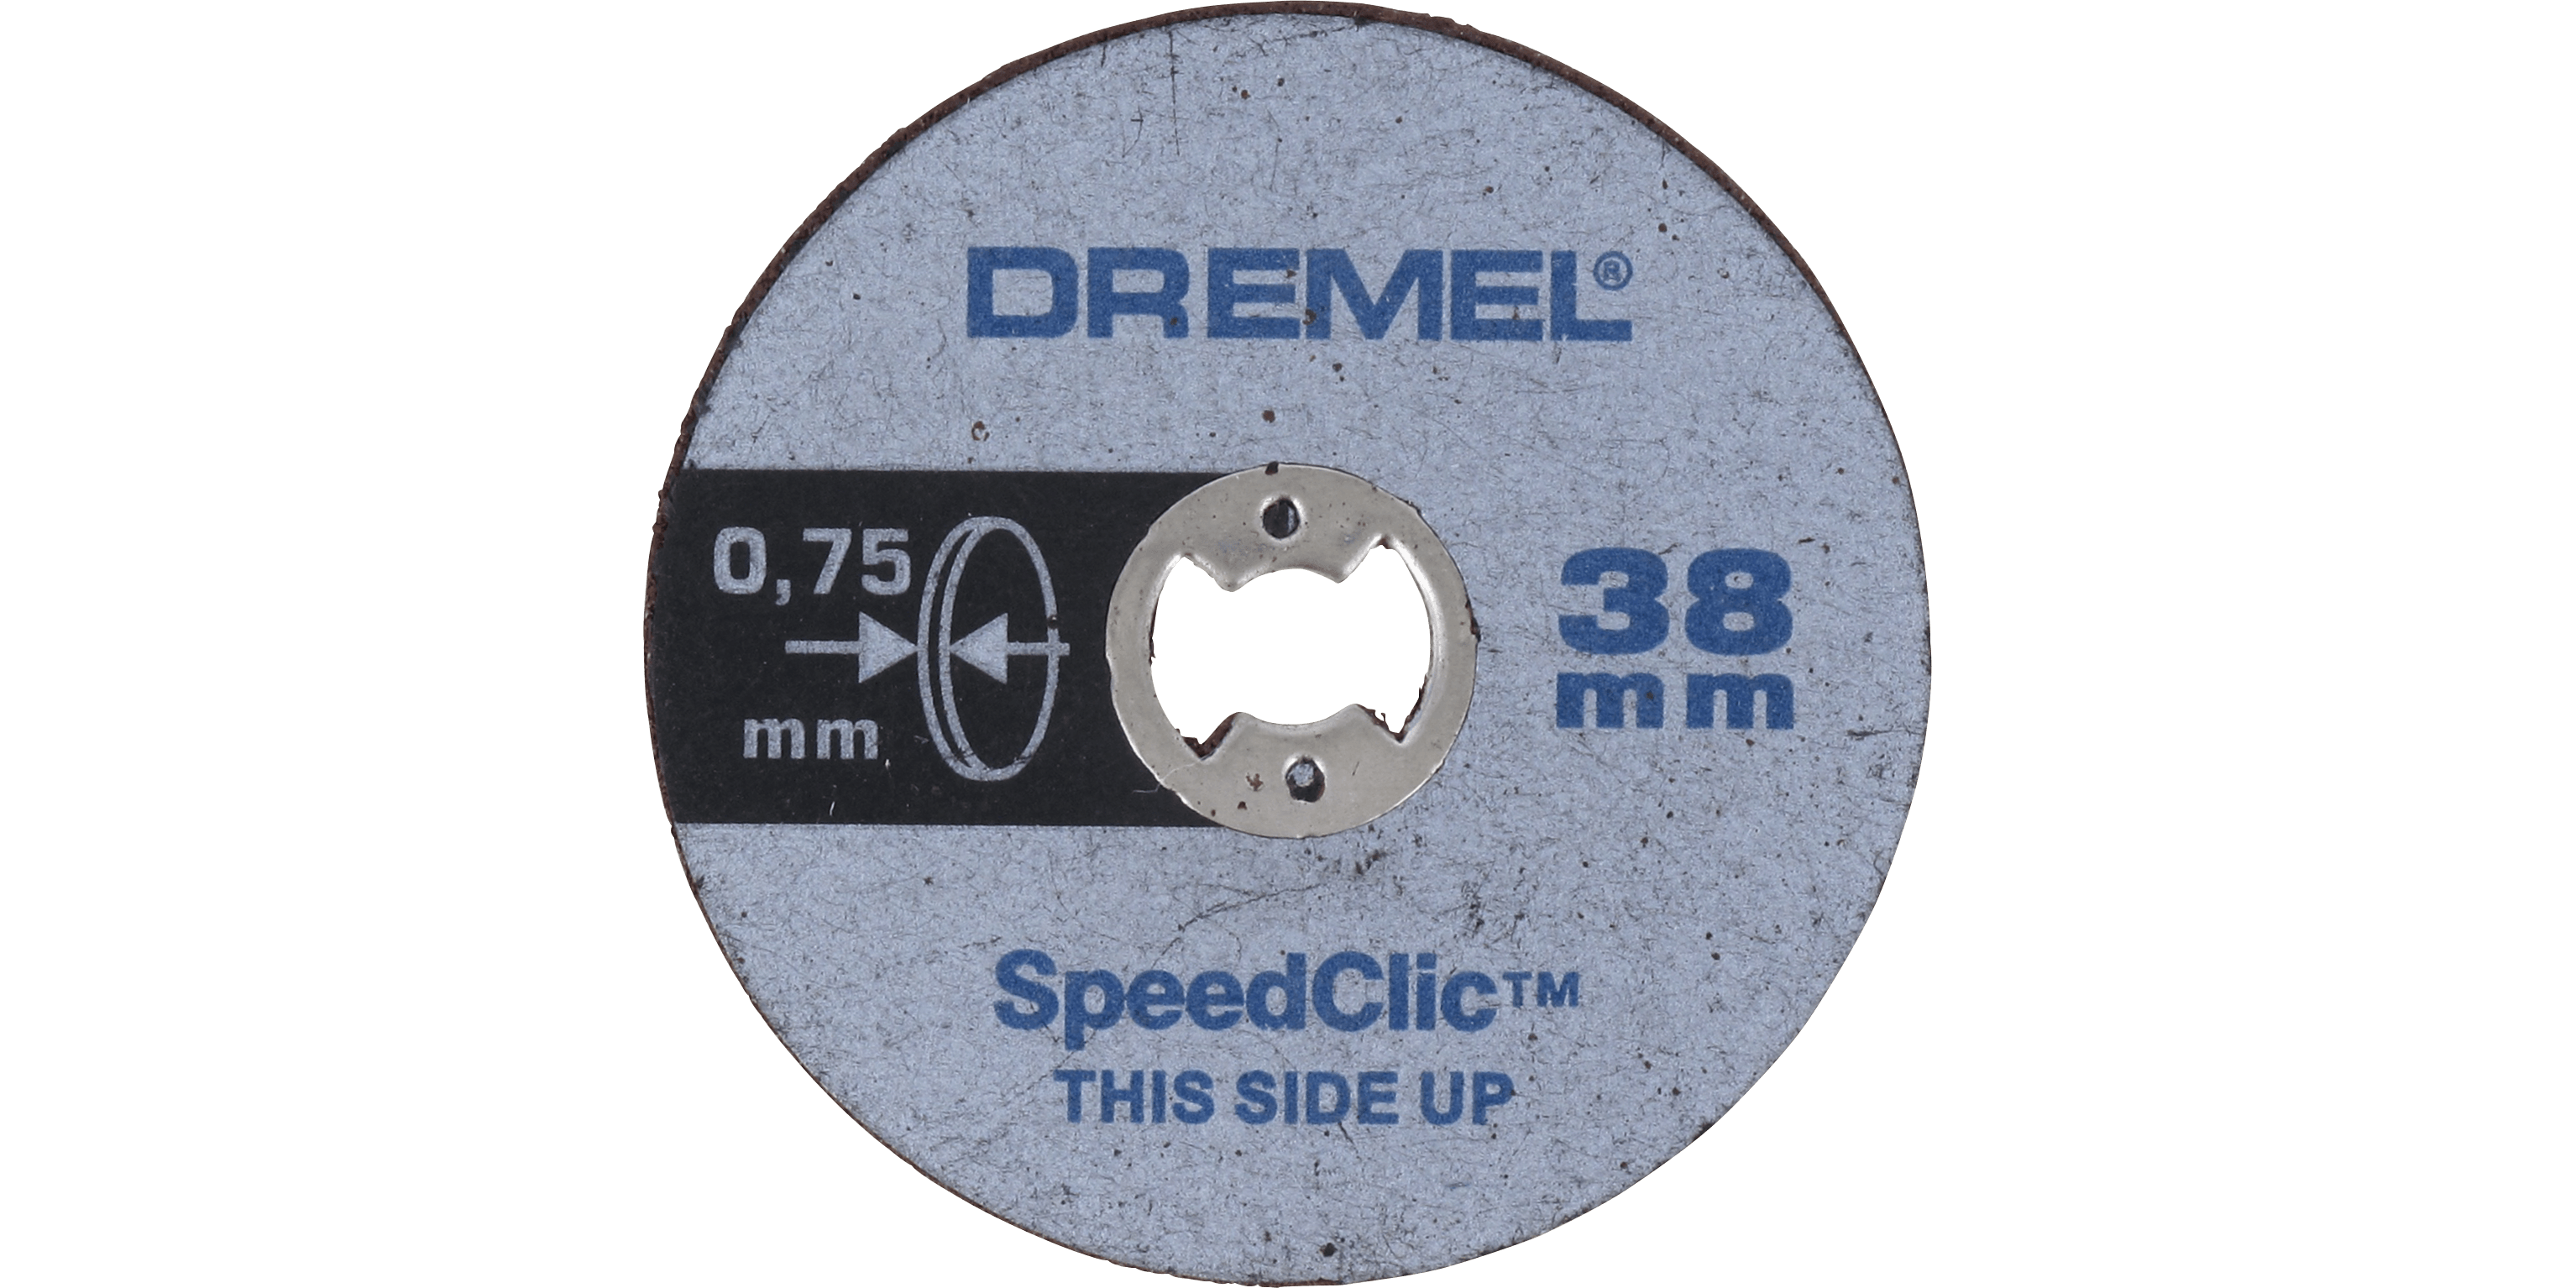 Dremel 409 disco corte metal 24x1mm (blister ) 6ud